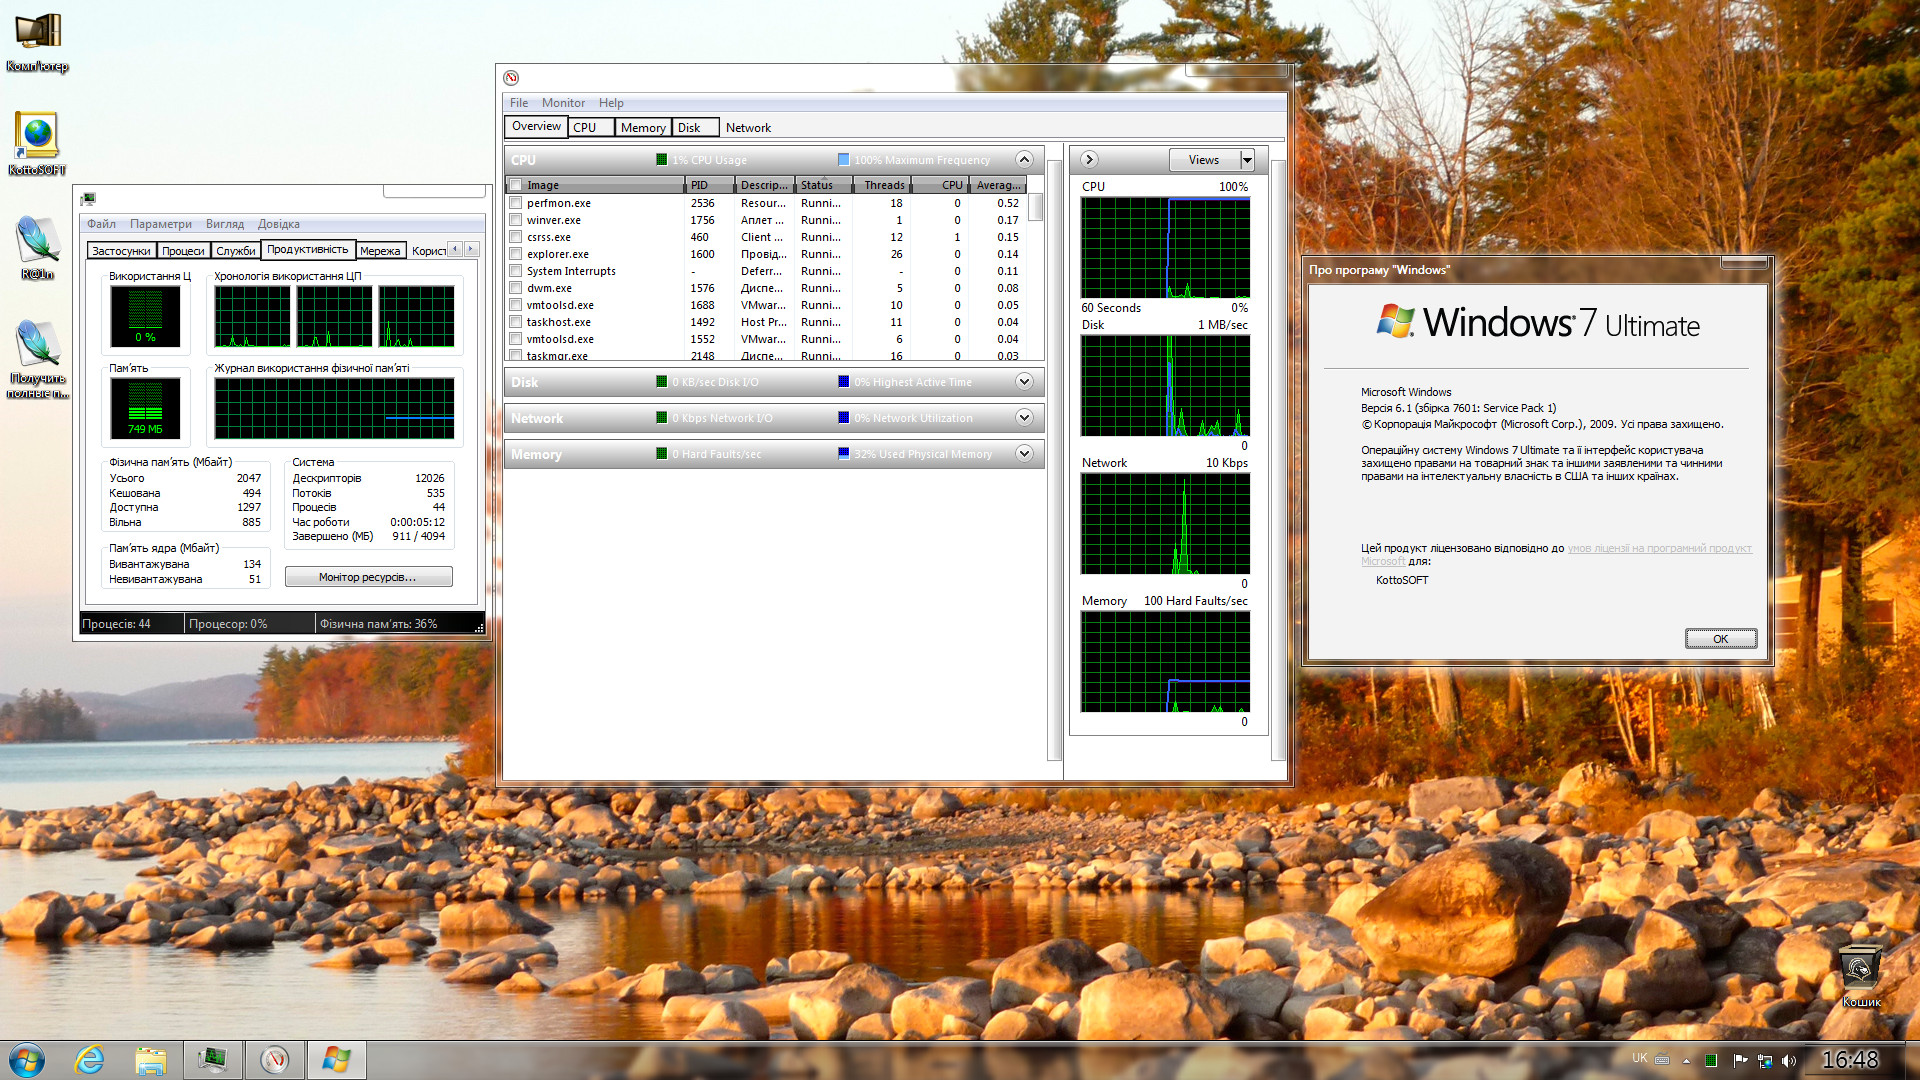 Windows 7 Ultimate SP1 Lite KottoSOFT v.47 - «Windows»